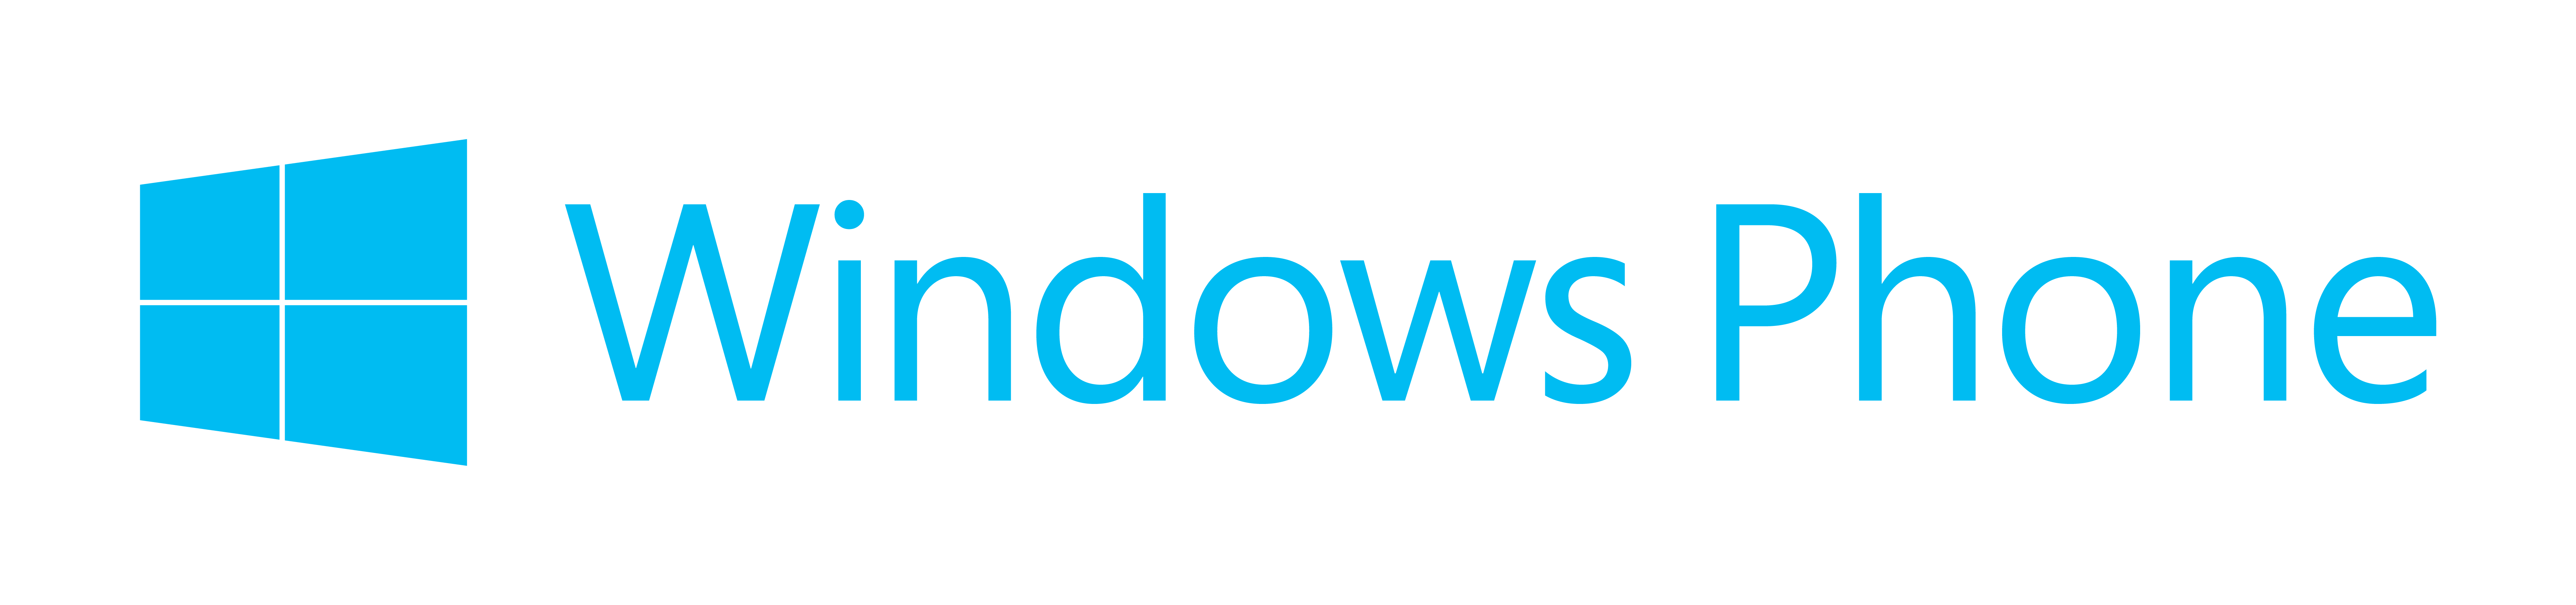 Windows Phone Logo PNG Wallpaper